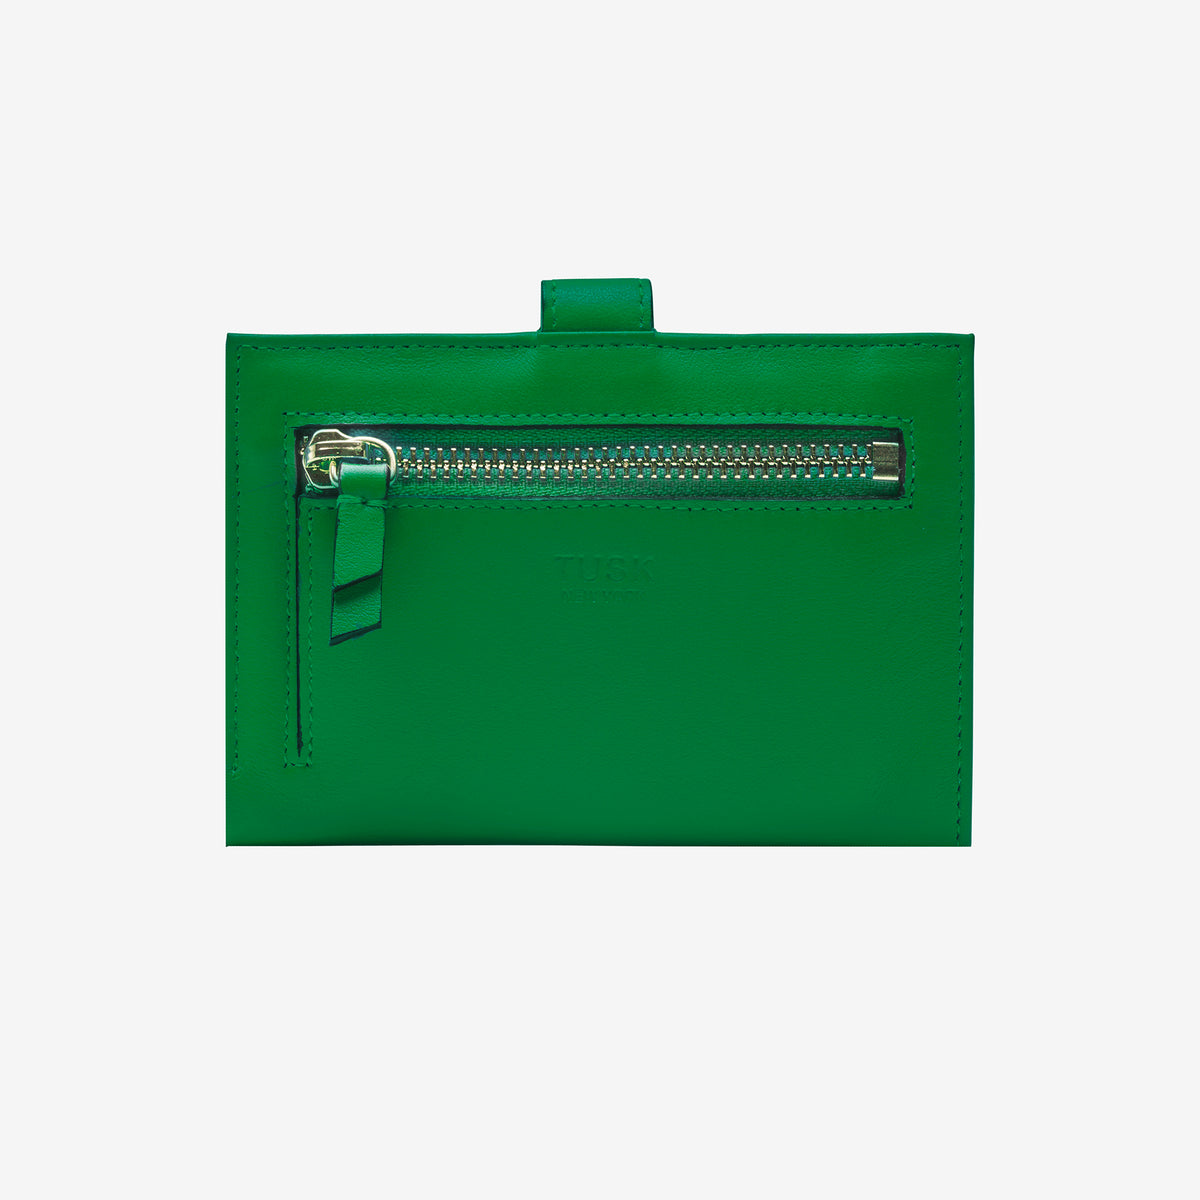 tusk-465-womens-leather-mini-clutch-wallet-emerald-back